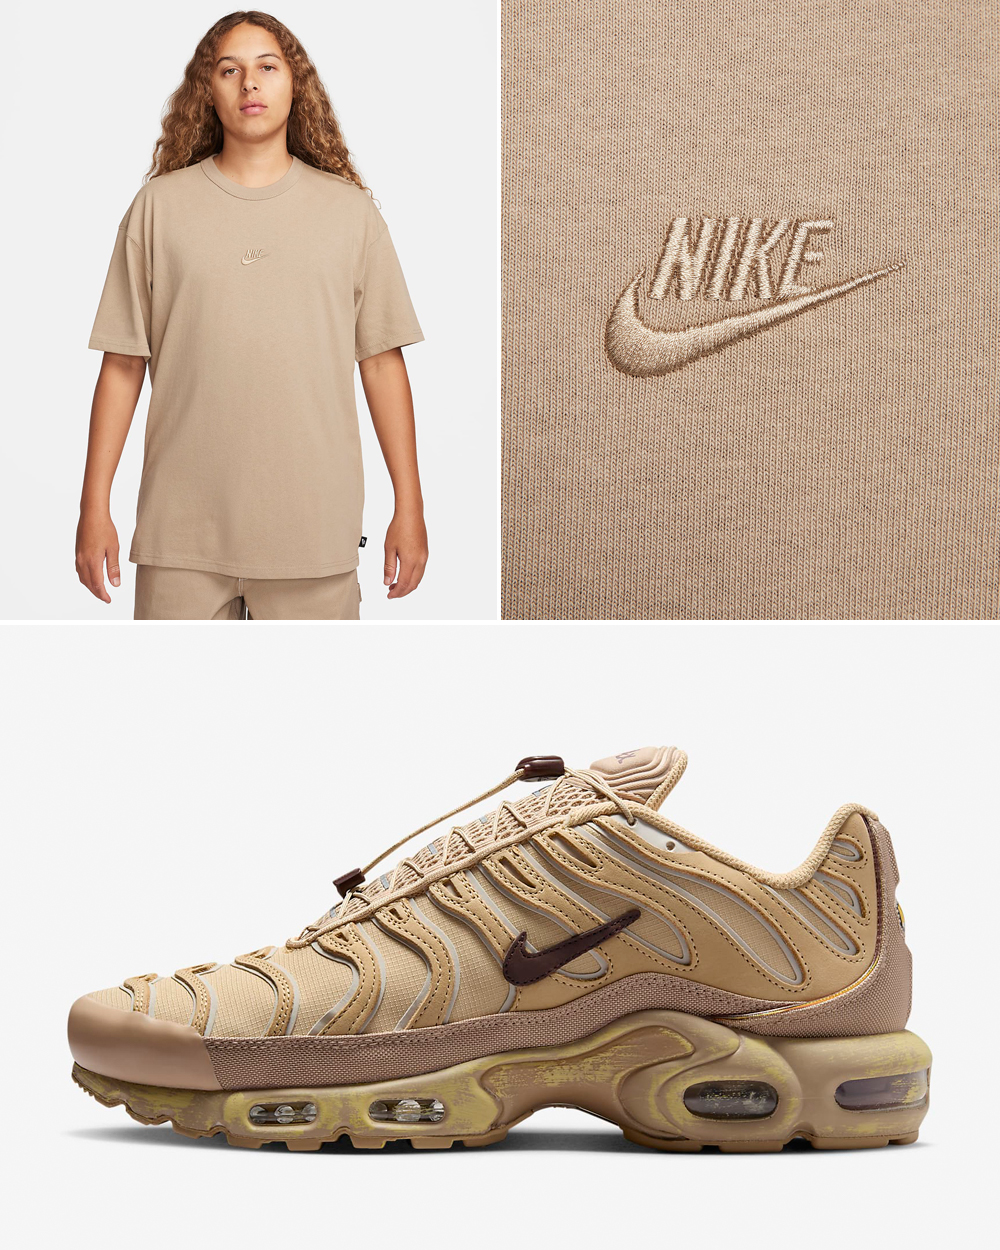 Nike-Air-Max-Plus-Sesame-Shirt-Matching-Outfit